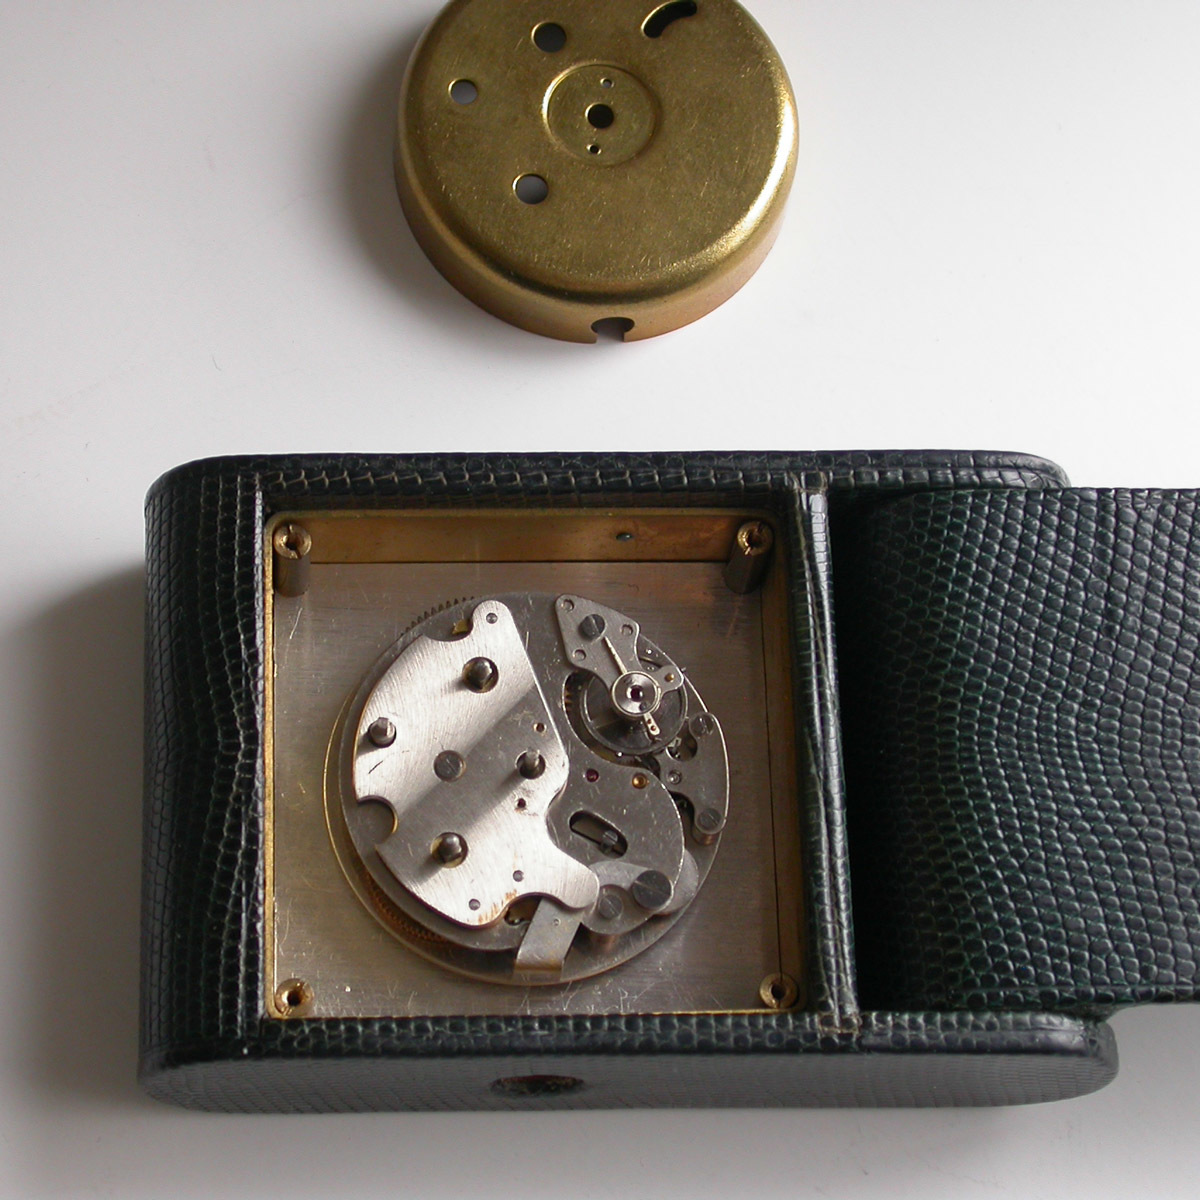 JAEGER alarm clock machine (2 day to coil /9 stone ) Lizard leather trim case 1950 period SWISS MADE / Vintage clock bracket clock travel clock 